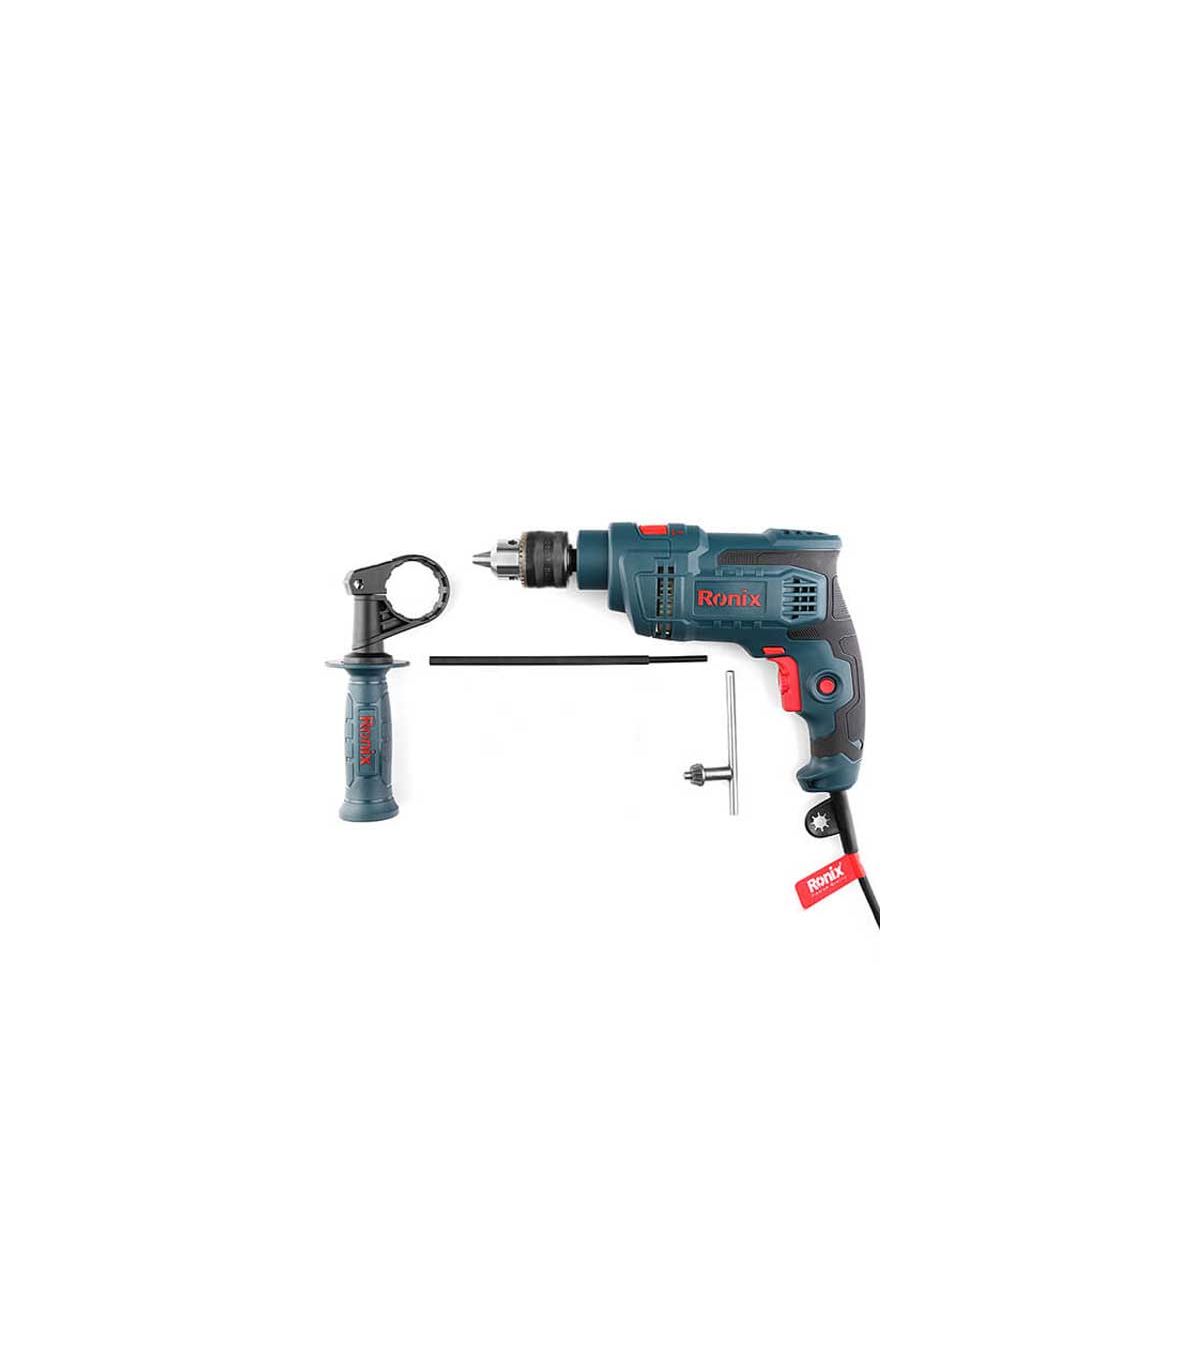 Ronix Hammer drill 2214